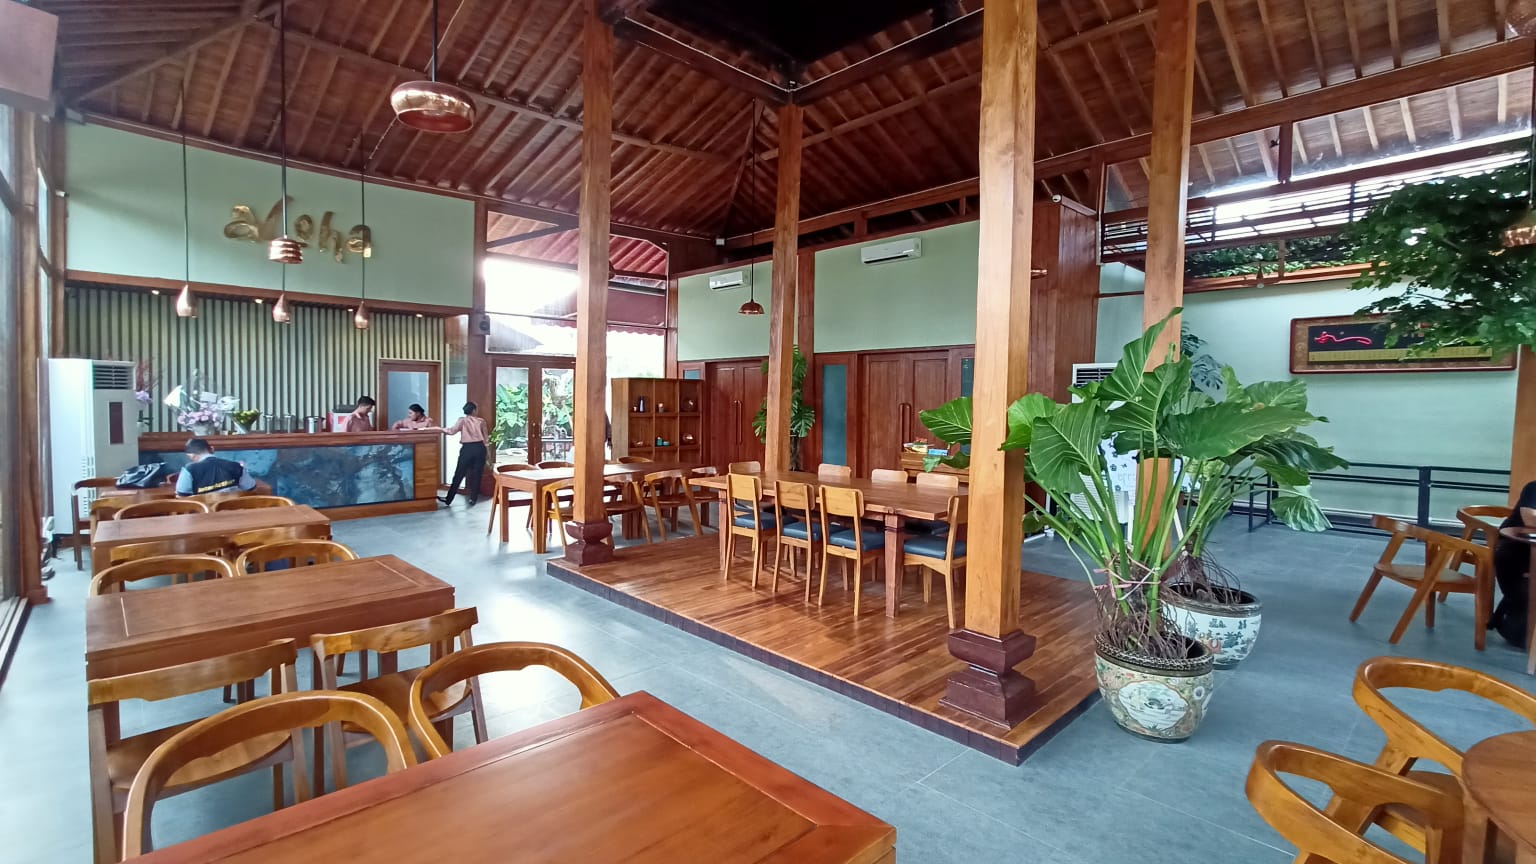  Restoran Aloha Pindah ke Surabaya: Furnitur Pakai Kayu Jati Koleksi Ibu